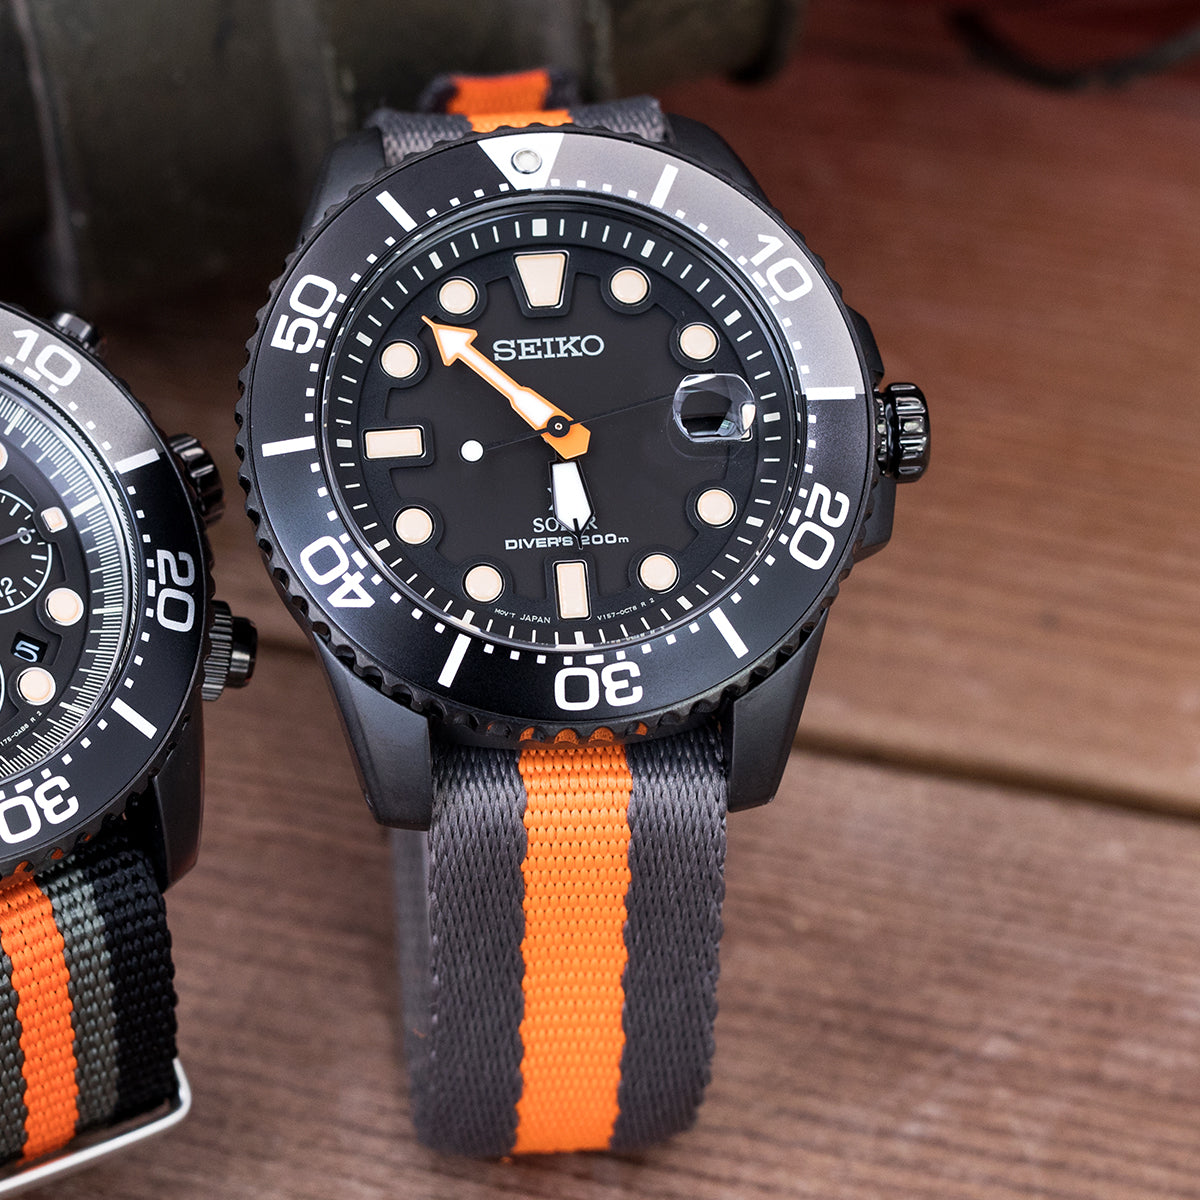 MiLTAT 20mm G10 Military NATO Watch Strap Sandwich Nylon Armband Brushed Grey & Orange Stripes Strapcode Watch Bands